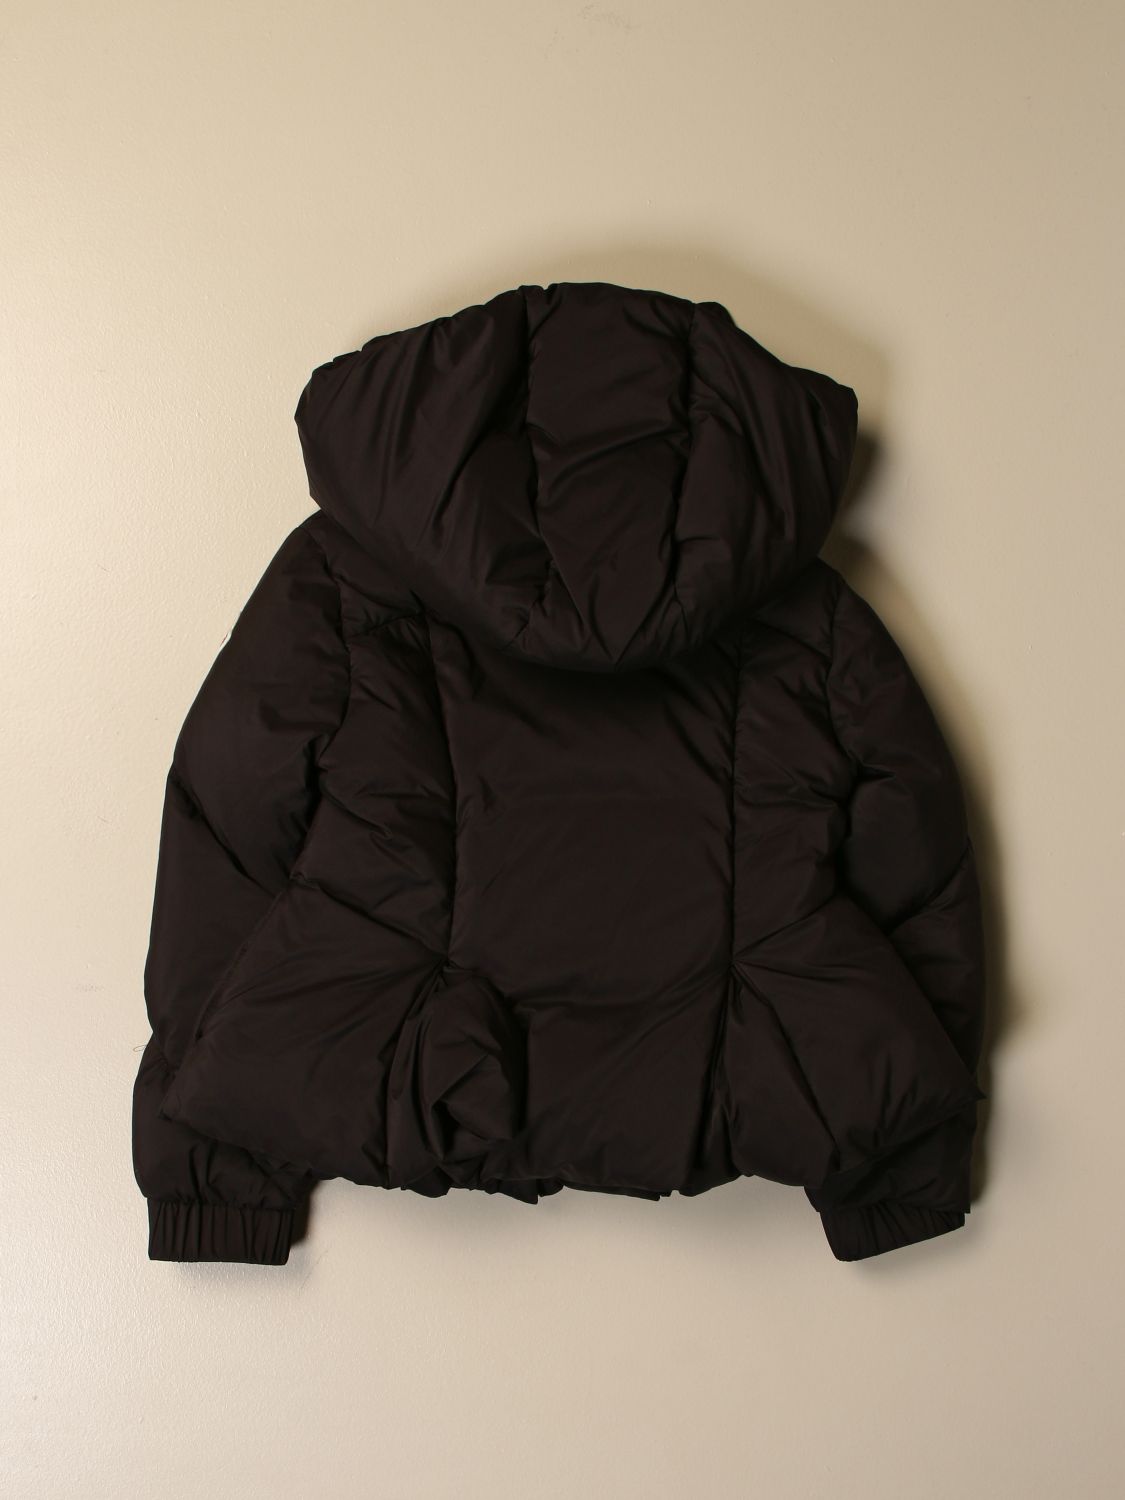 moncler mountain jacket